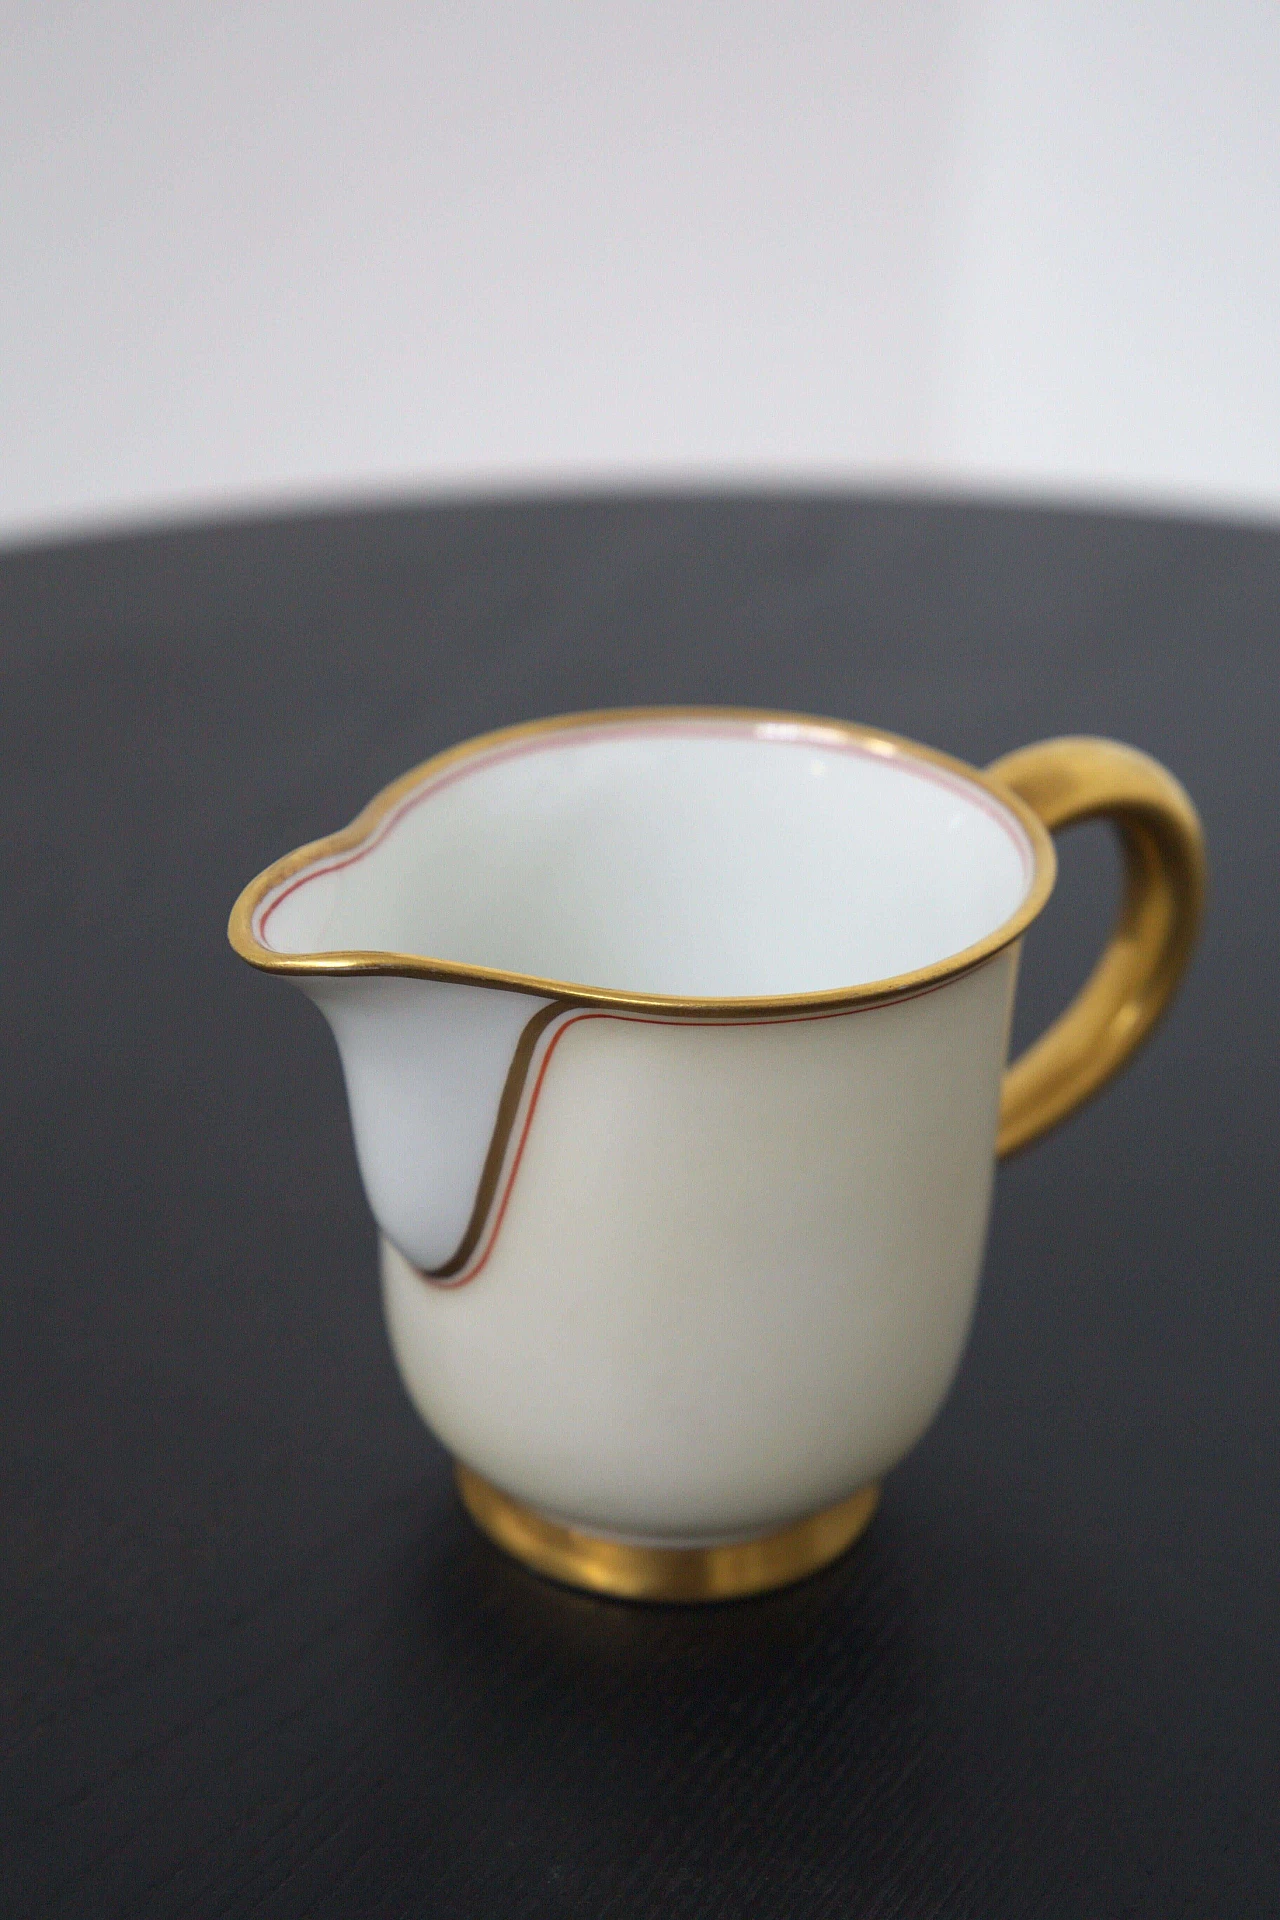 Ceramic and pure gold tea set by Gio Ponti for Ginori, 1930s 1477495